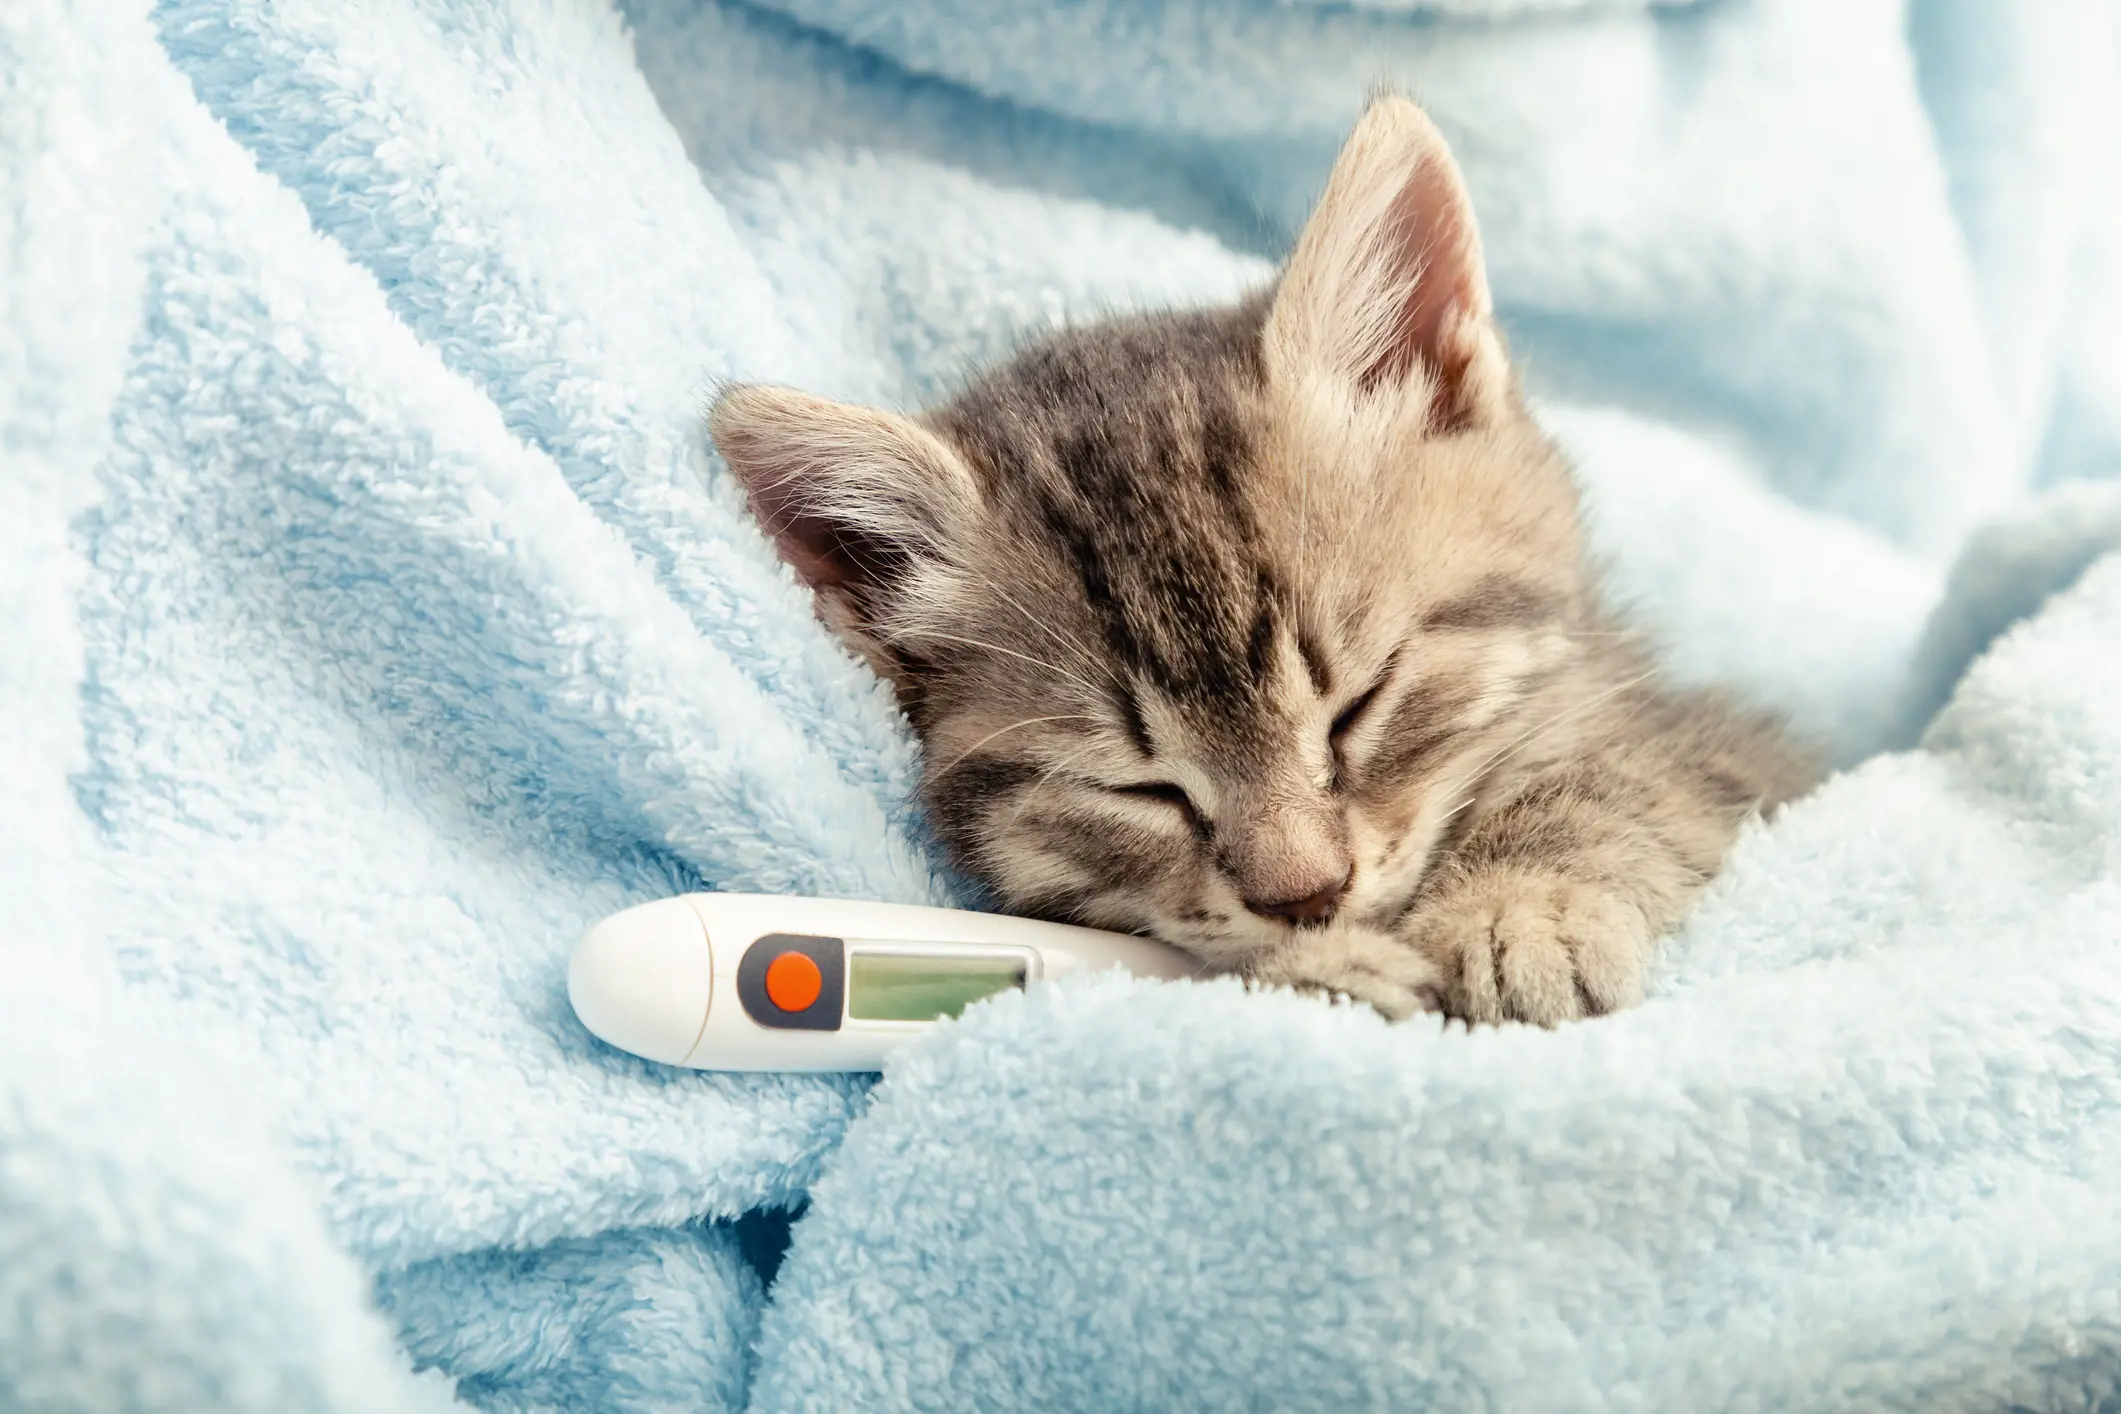 Charity warns of cat flu risk